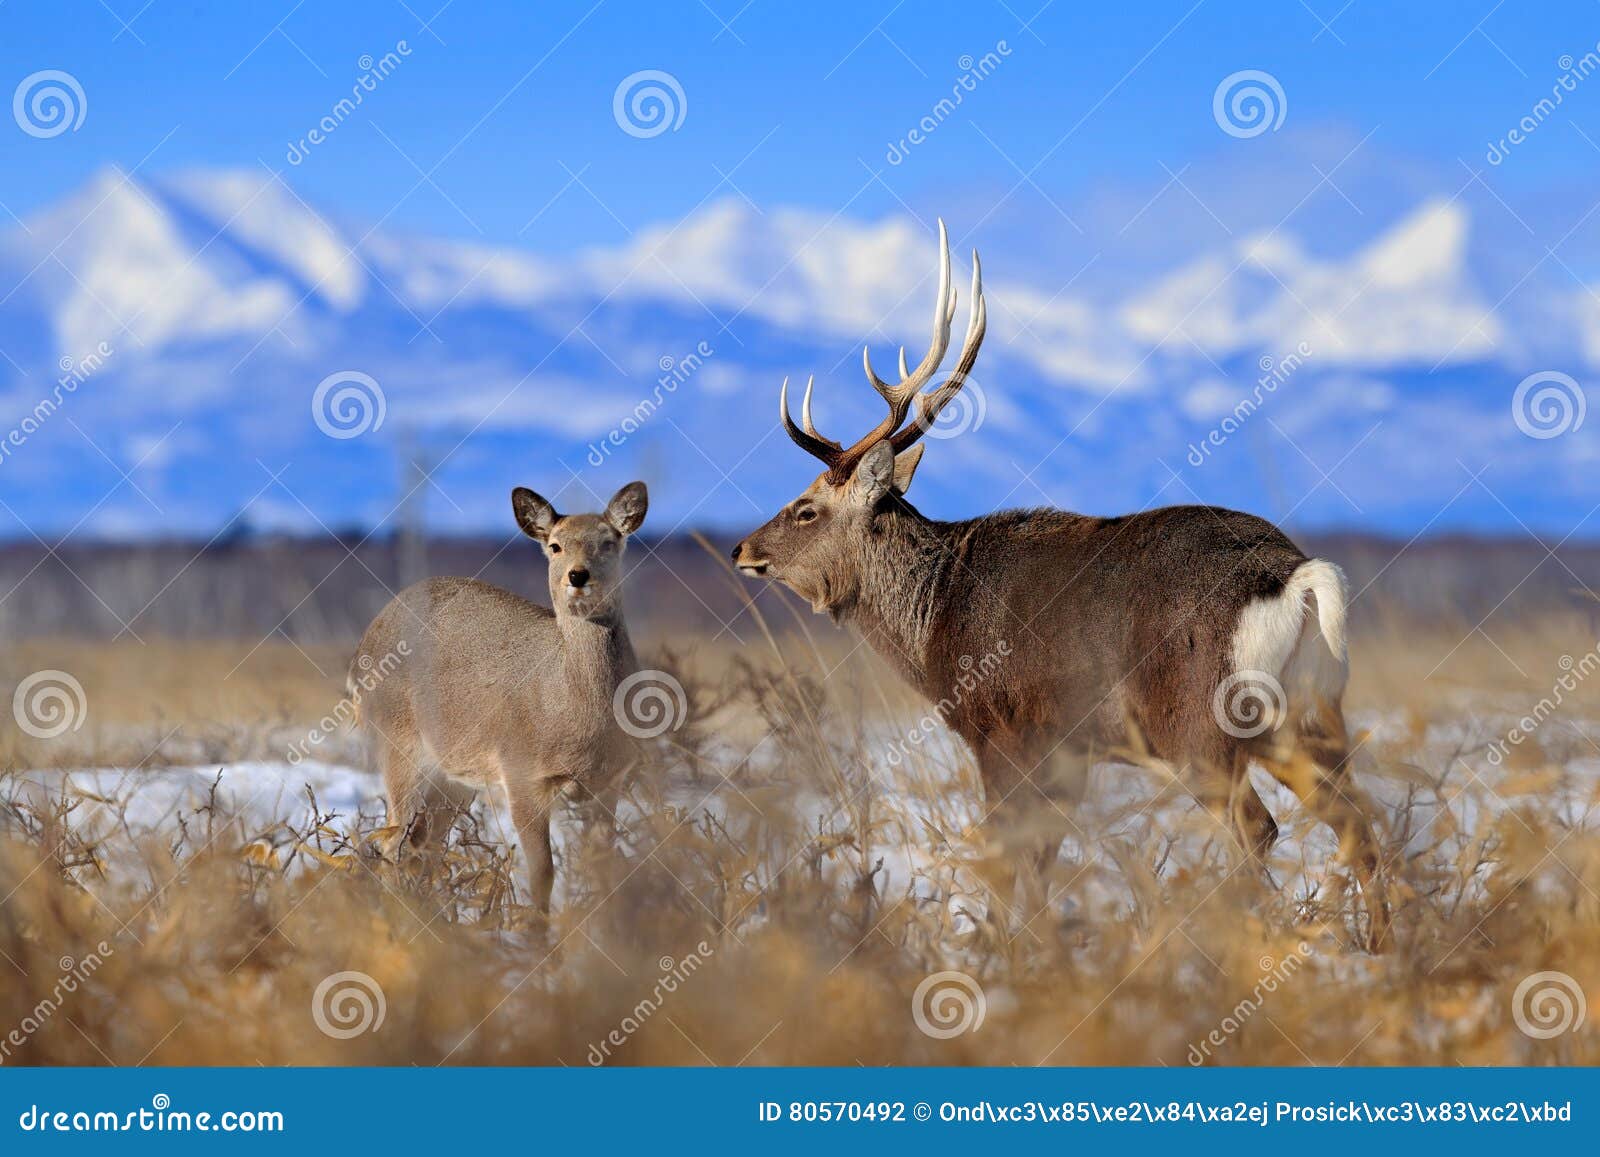 pair of deer. hokkaido sika deer, cervus nippon yesoensis, in the snow meadow. winter mountains and forest in the background.